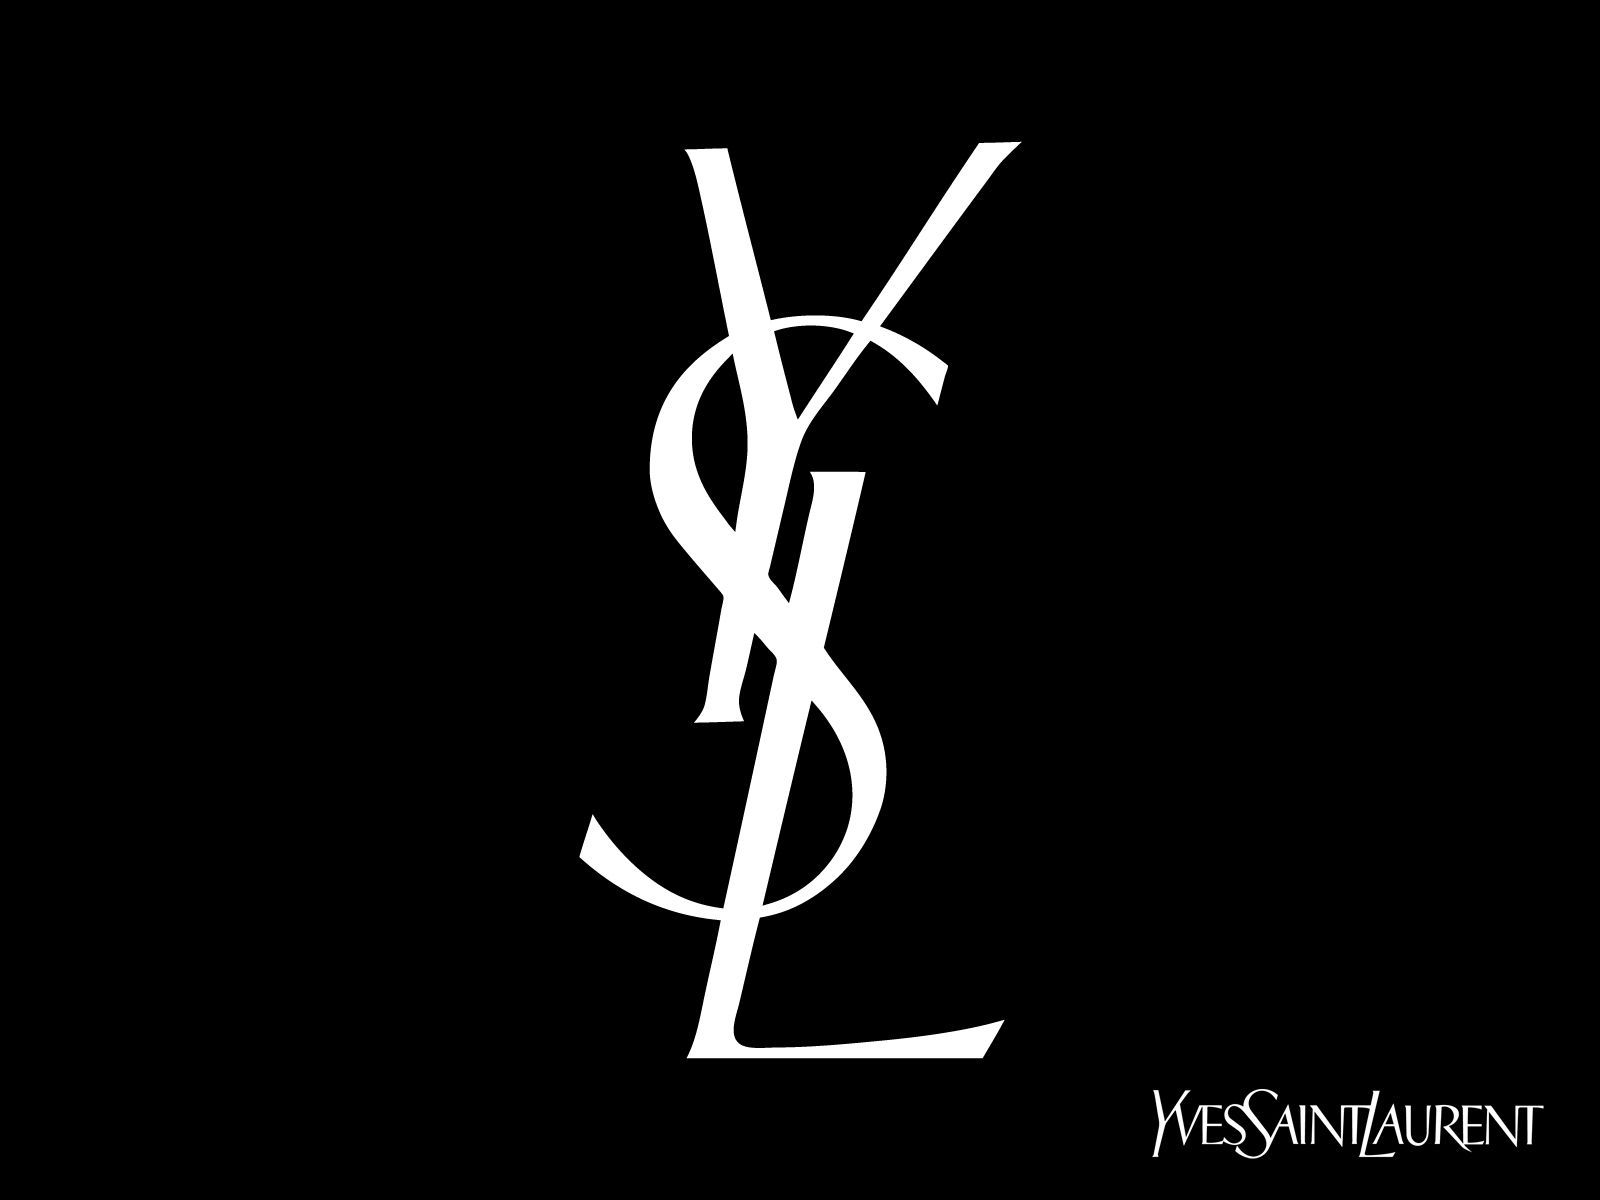 YSL/Yves Saint Laurent original branding